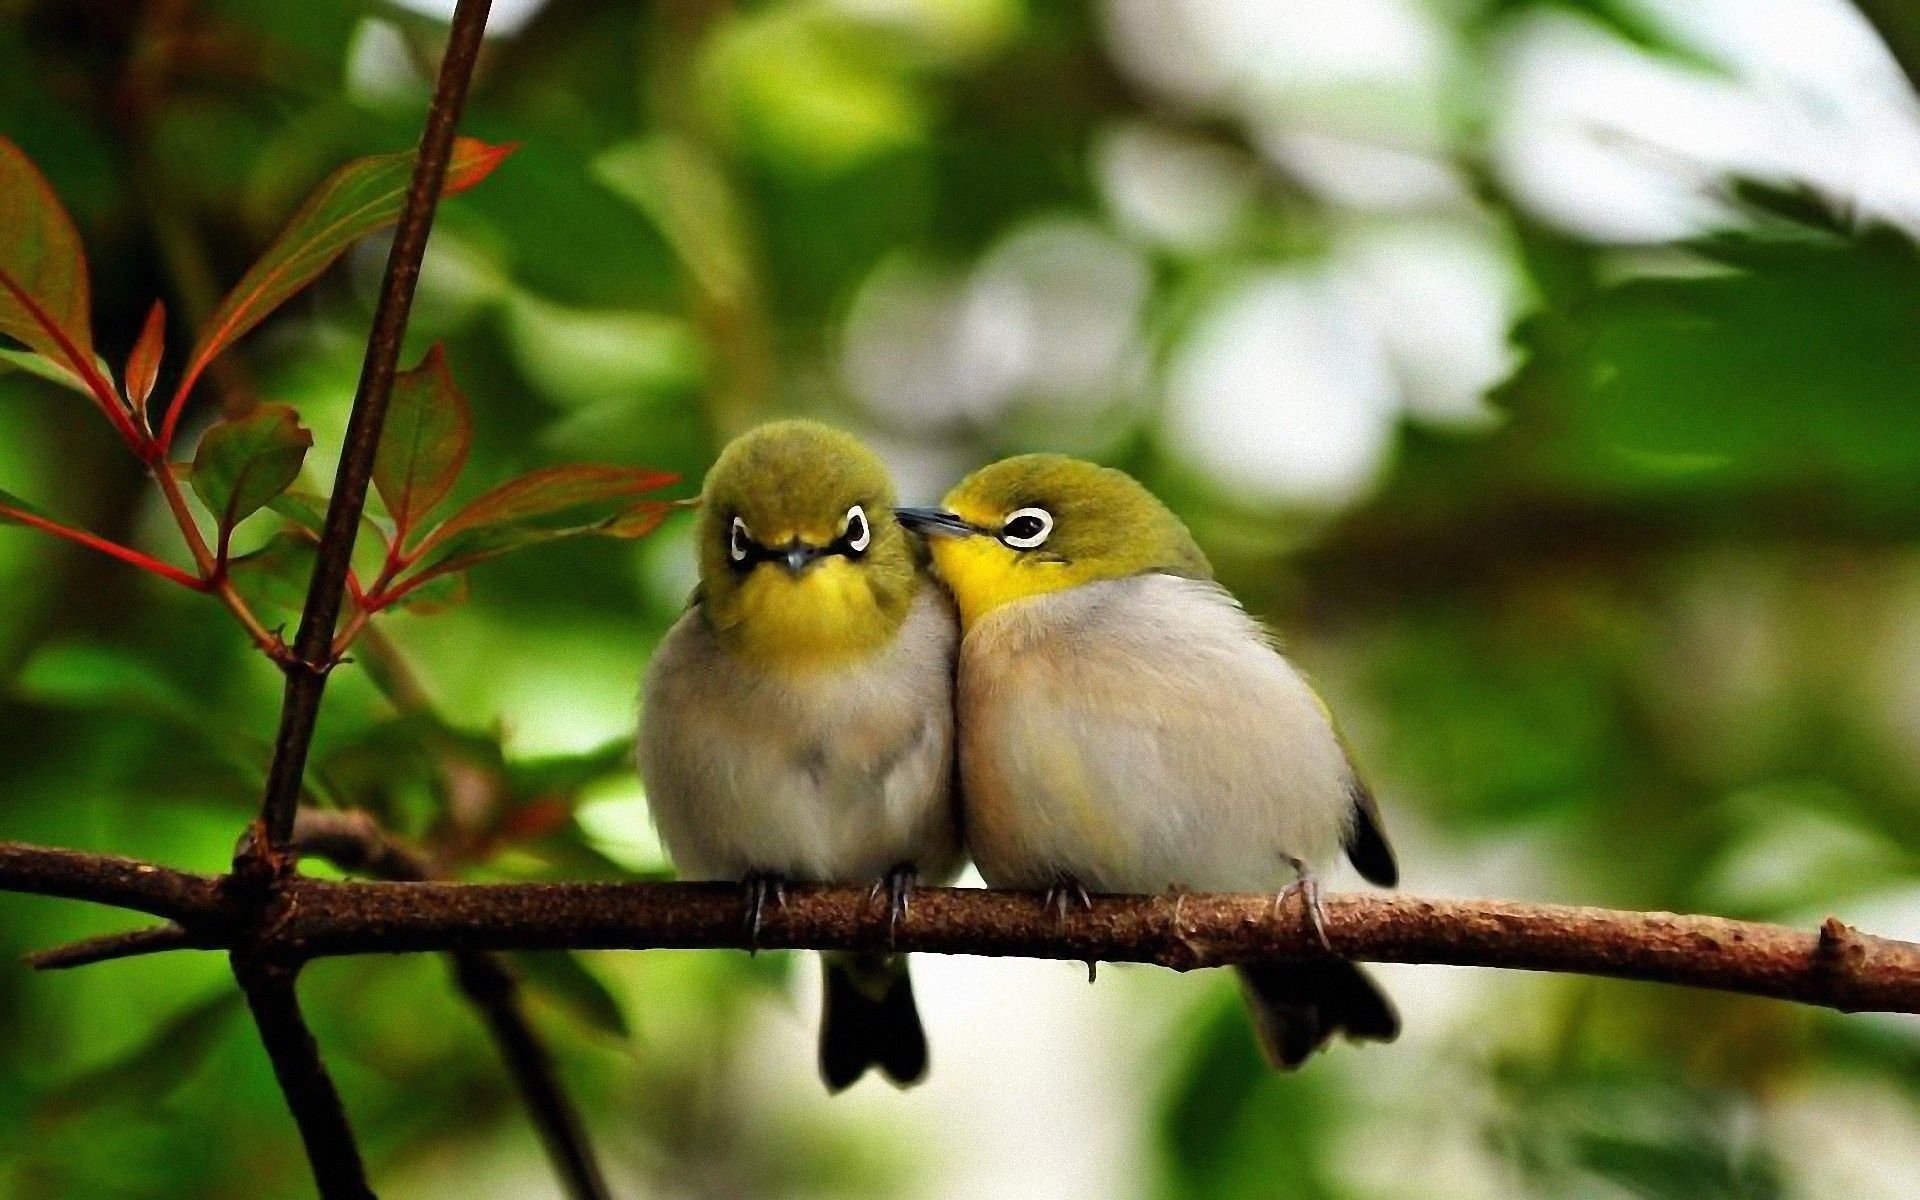 Cute Wallpaper Nature Birds Image